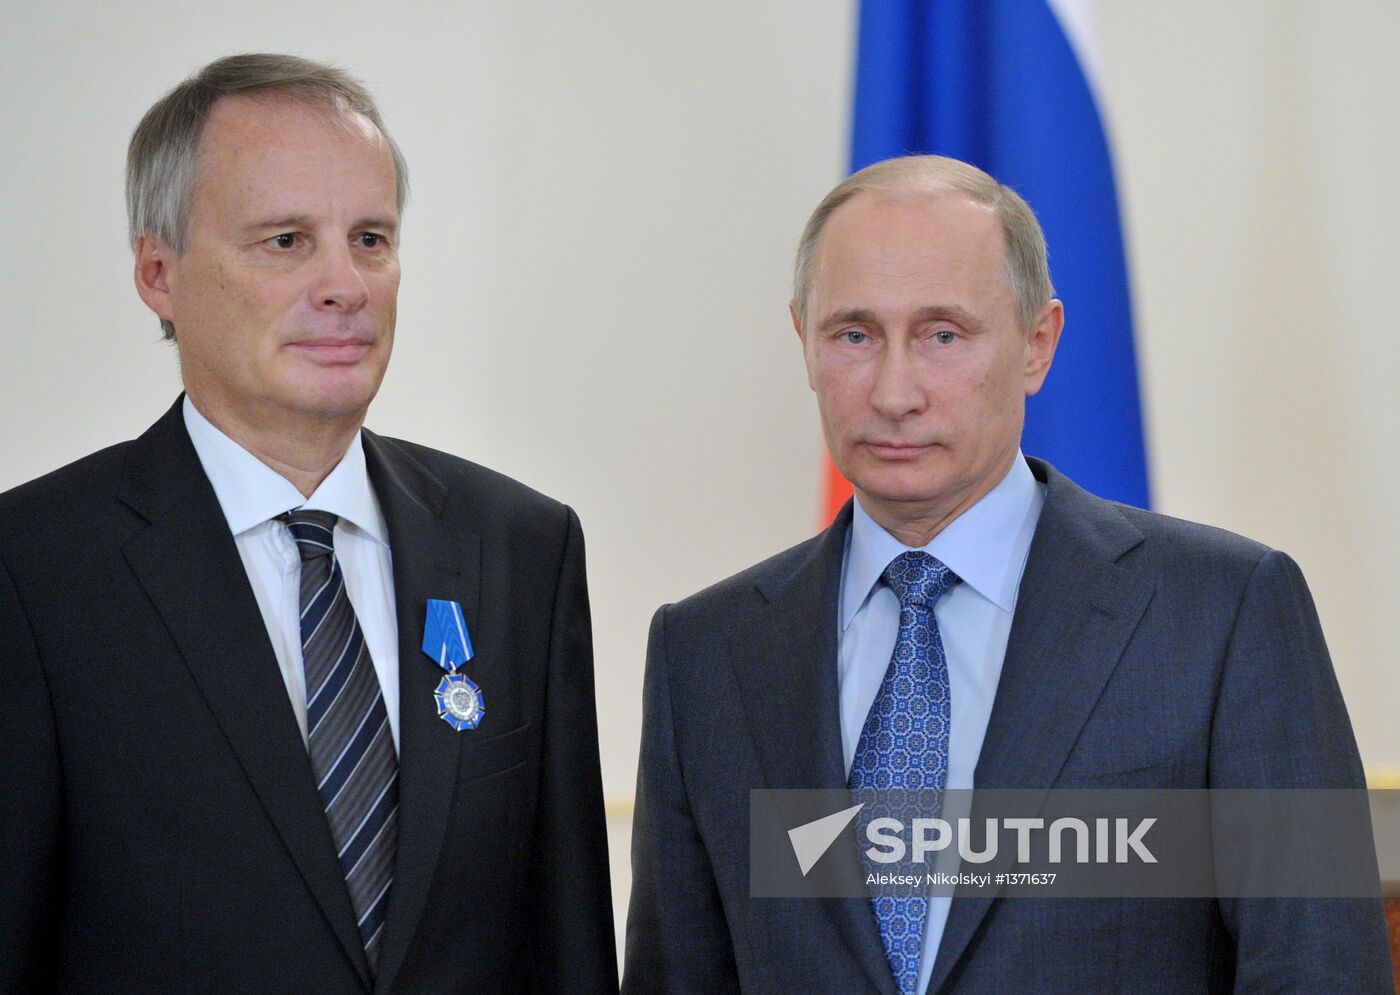 President Vladimir Putin presents state awards